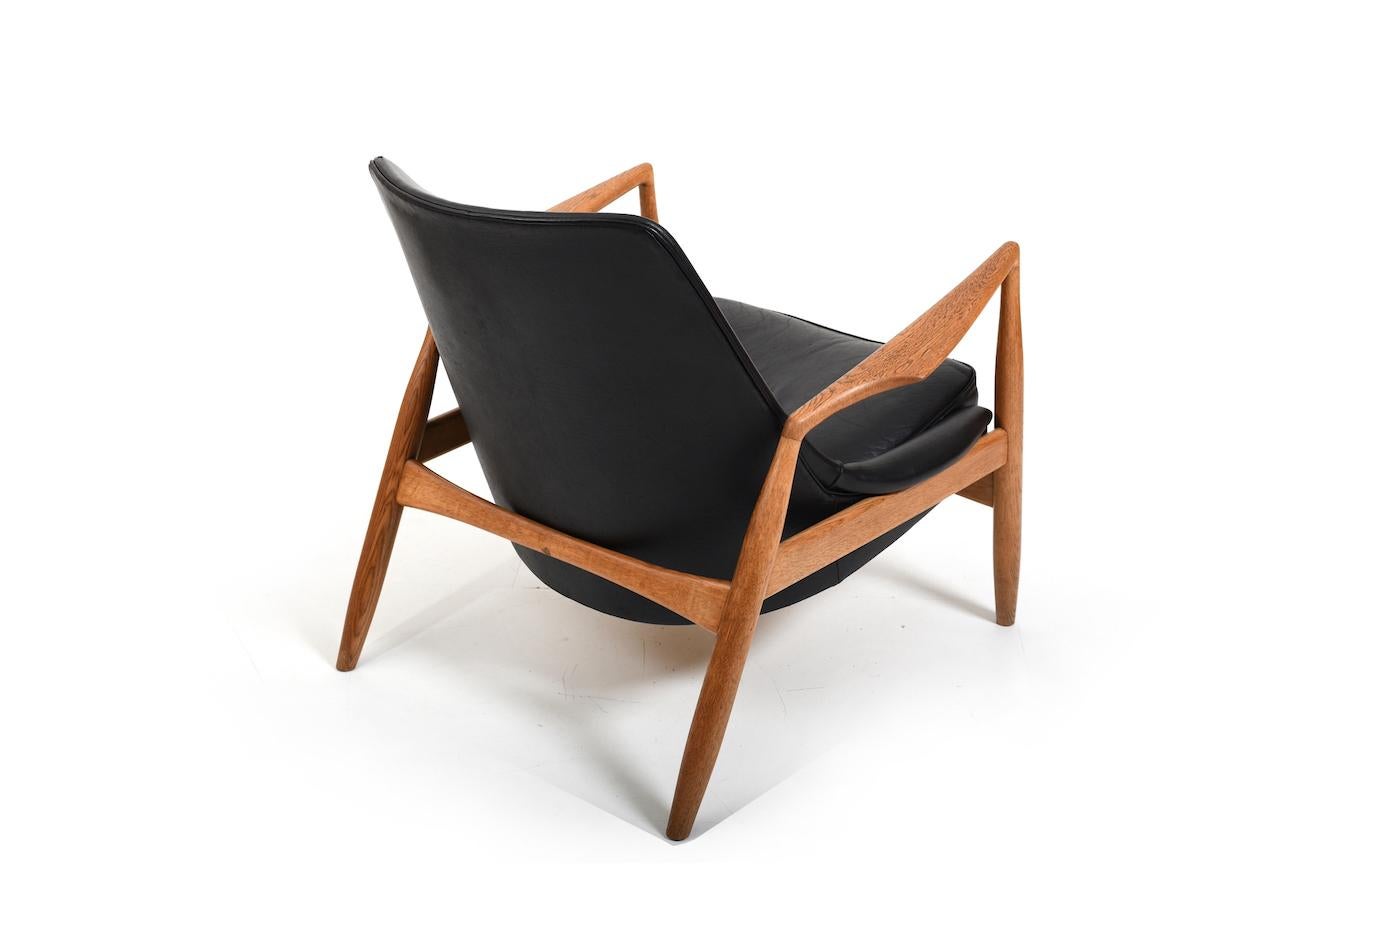 Ib Kofod Larsen Easychair Sälen / Seal Chair 1960s for Ope For Sale 4